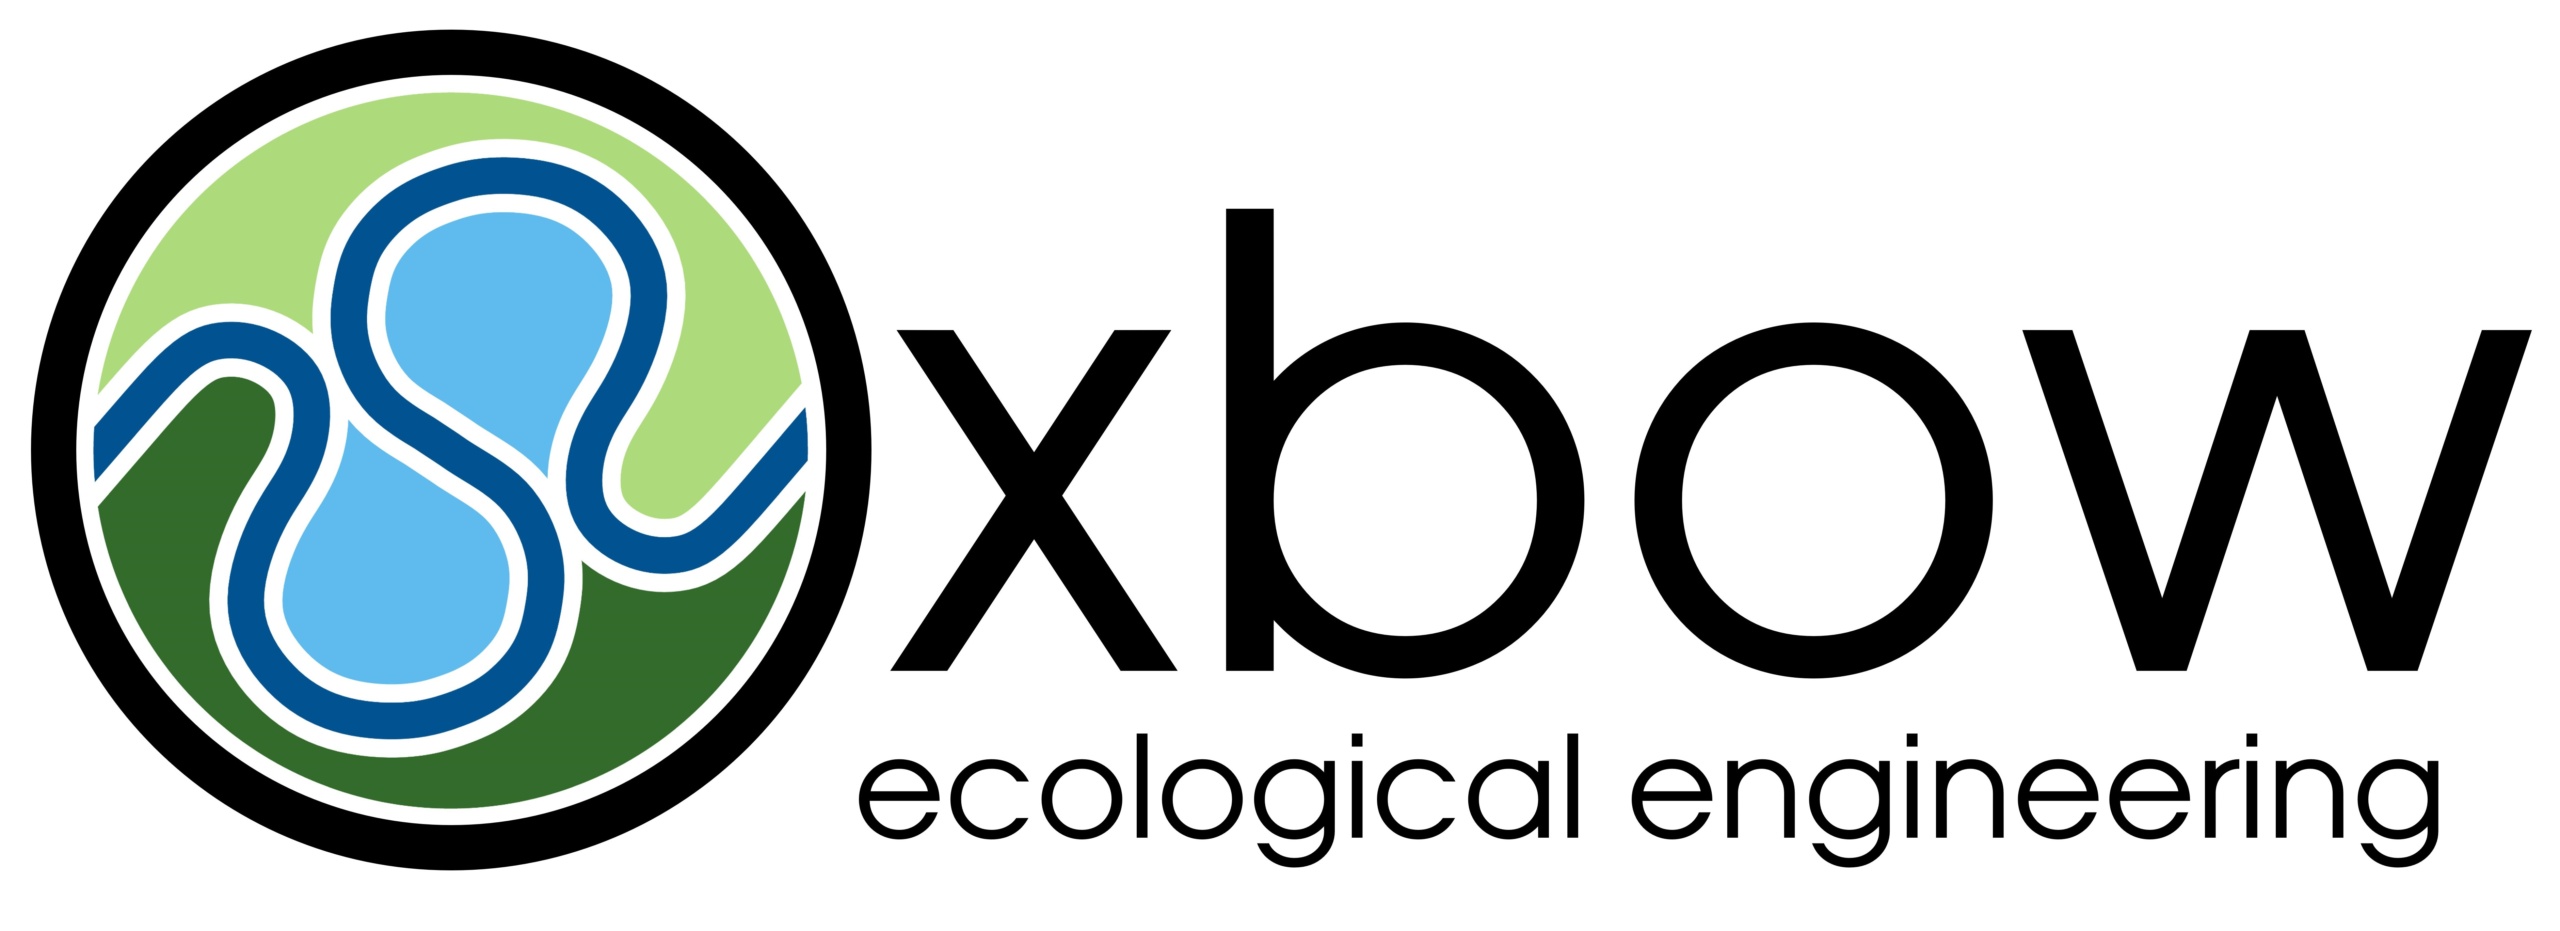 Oxbow Ecological Engineering, LLC